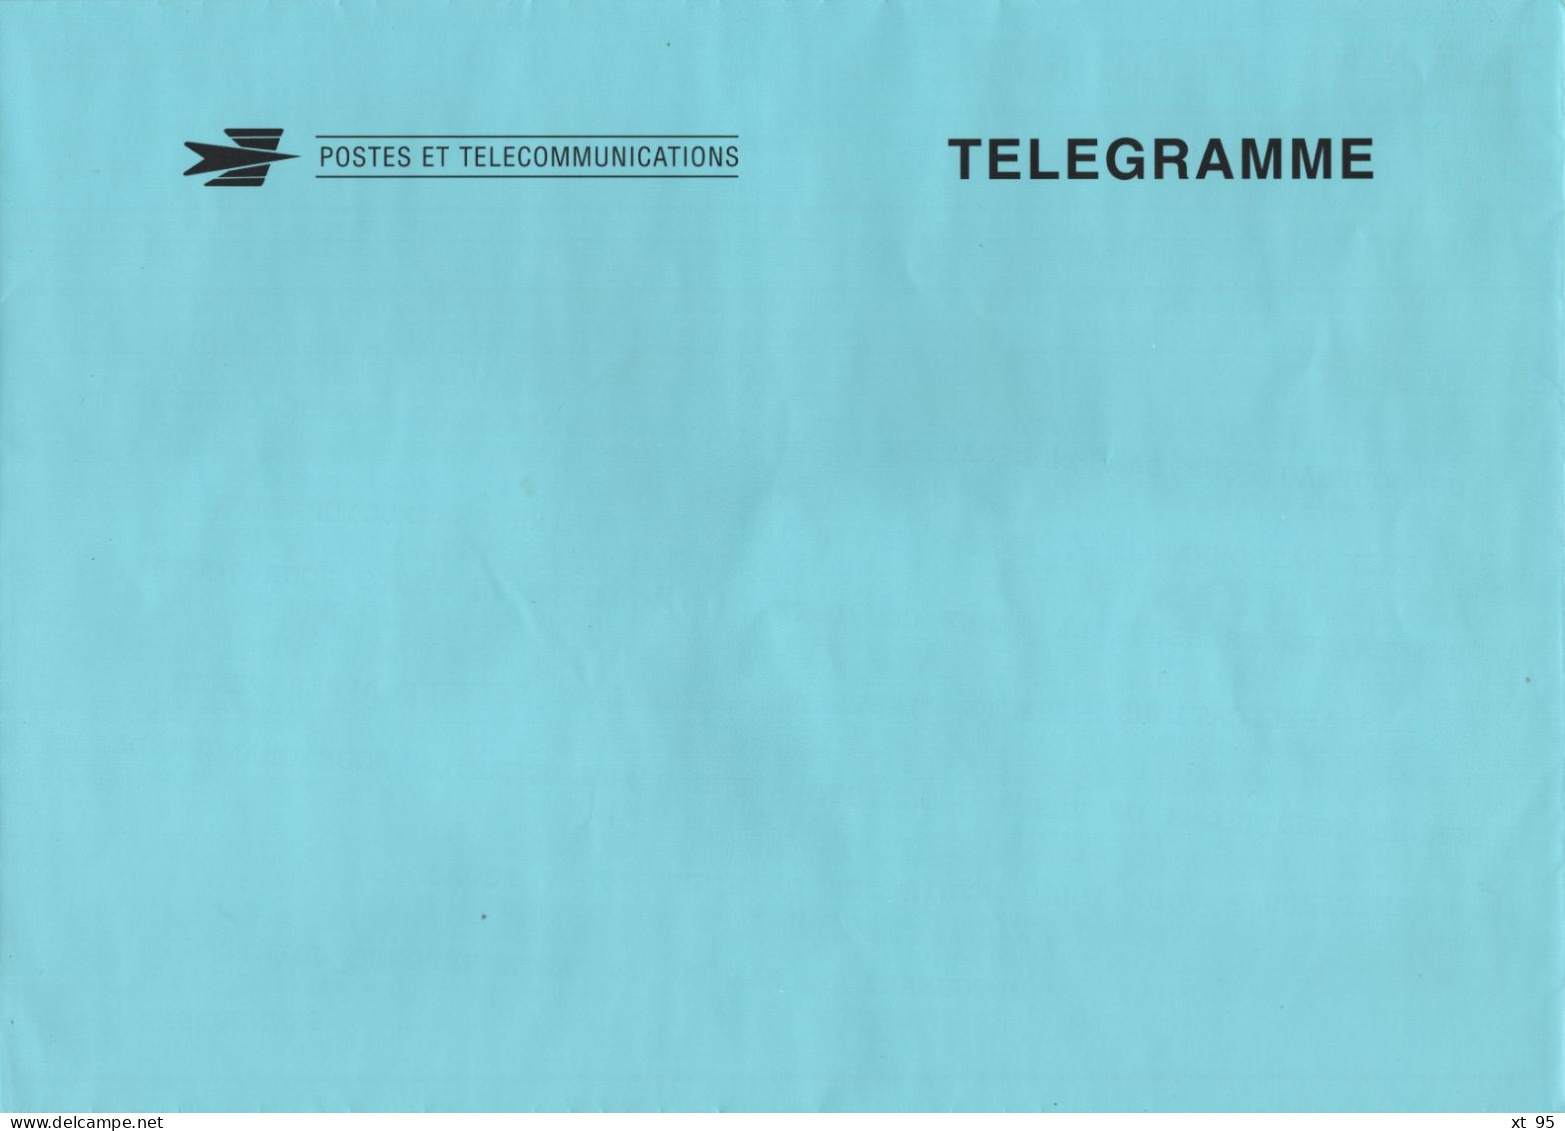 Simili Telegramme (grand Format A4) - Publicite - Sennheiser - Electricite - Telegraph And Telephone